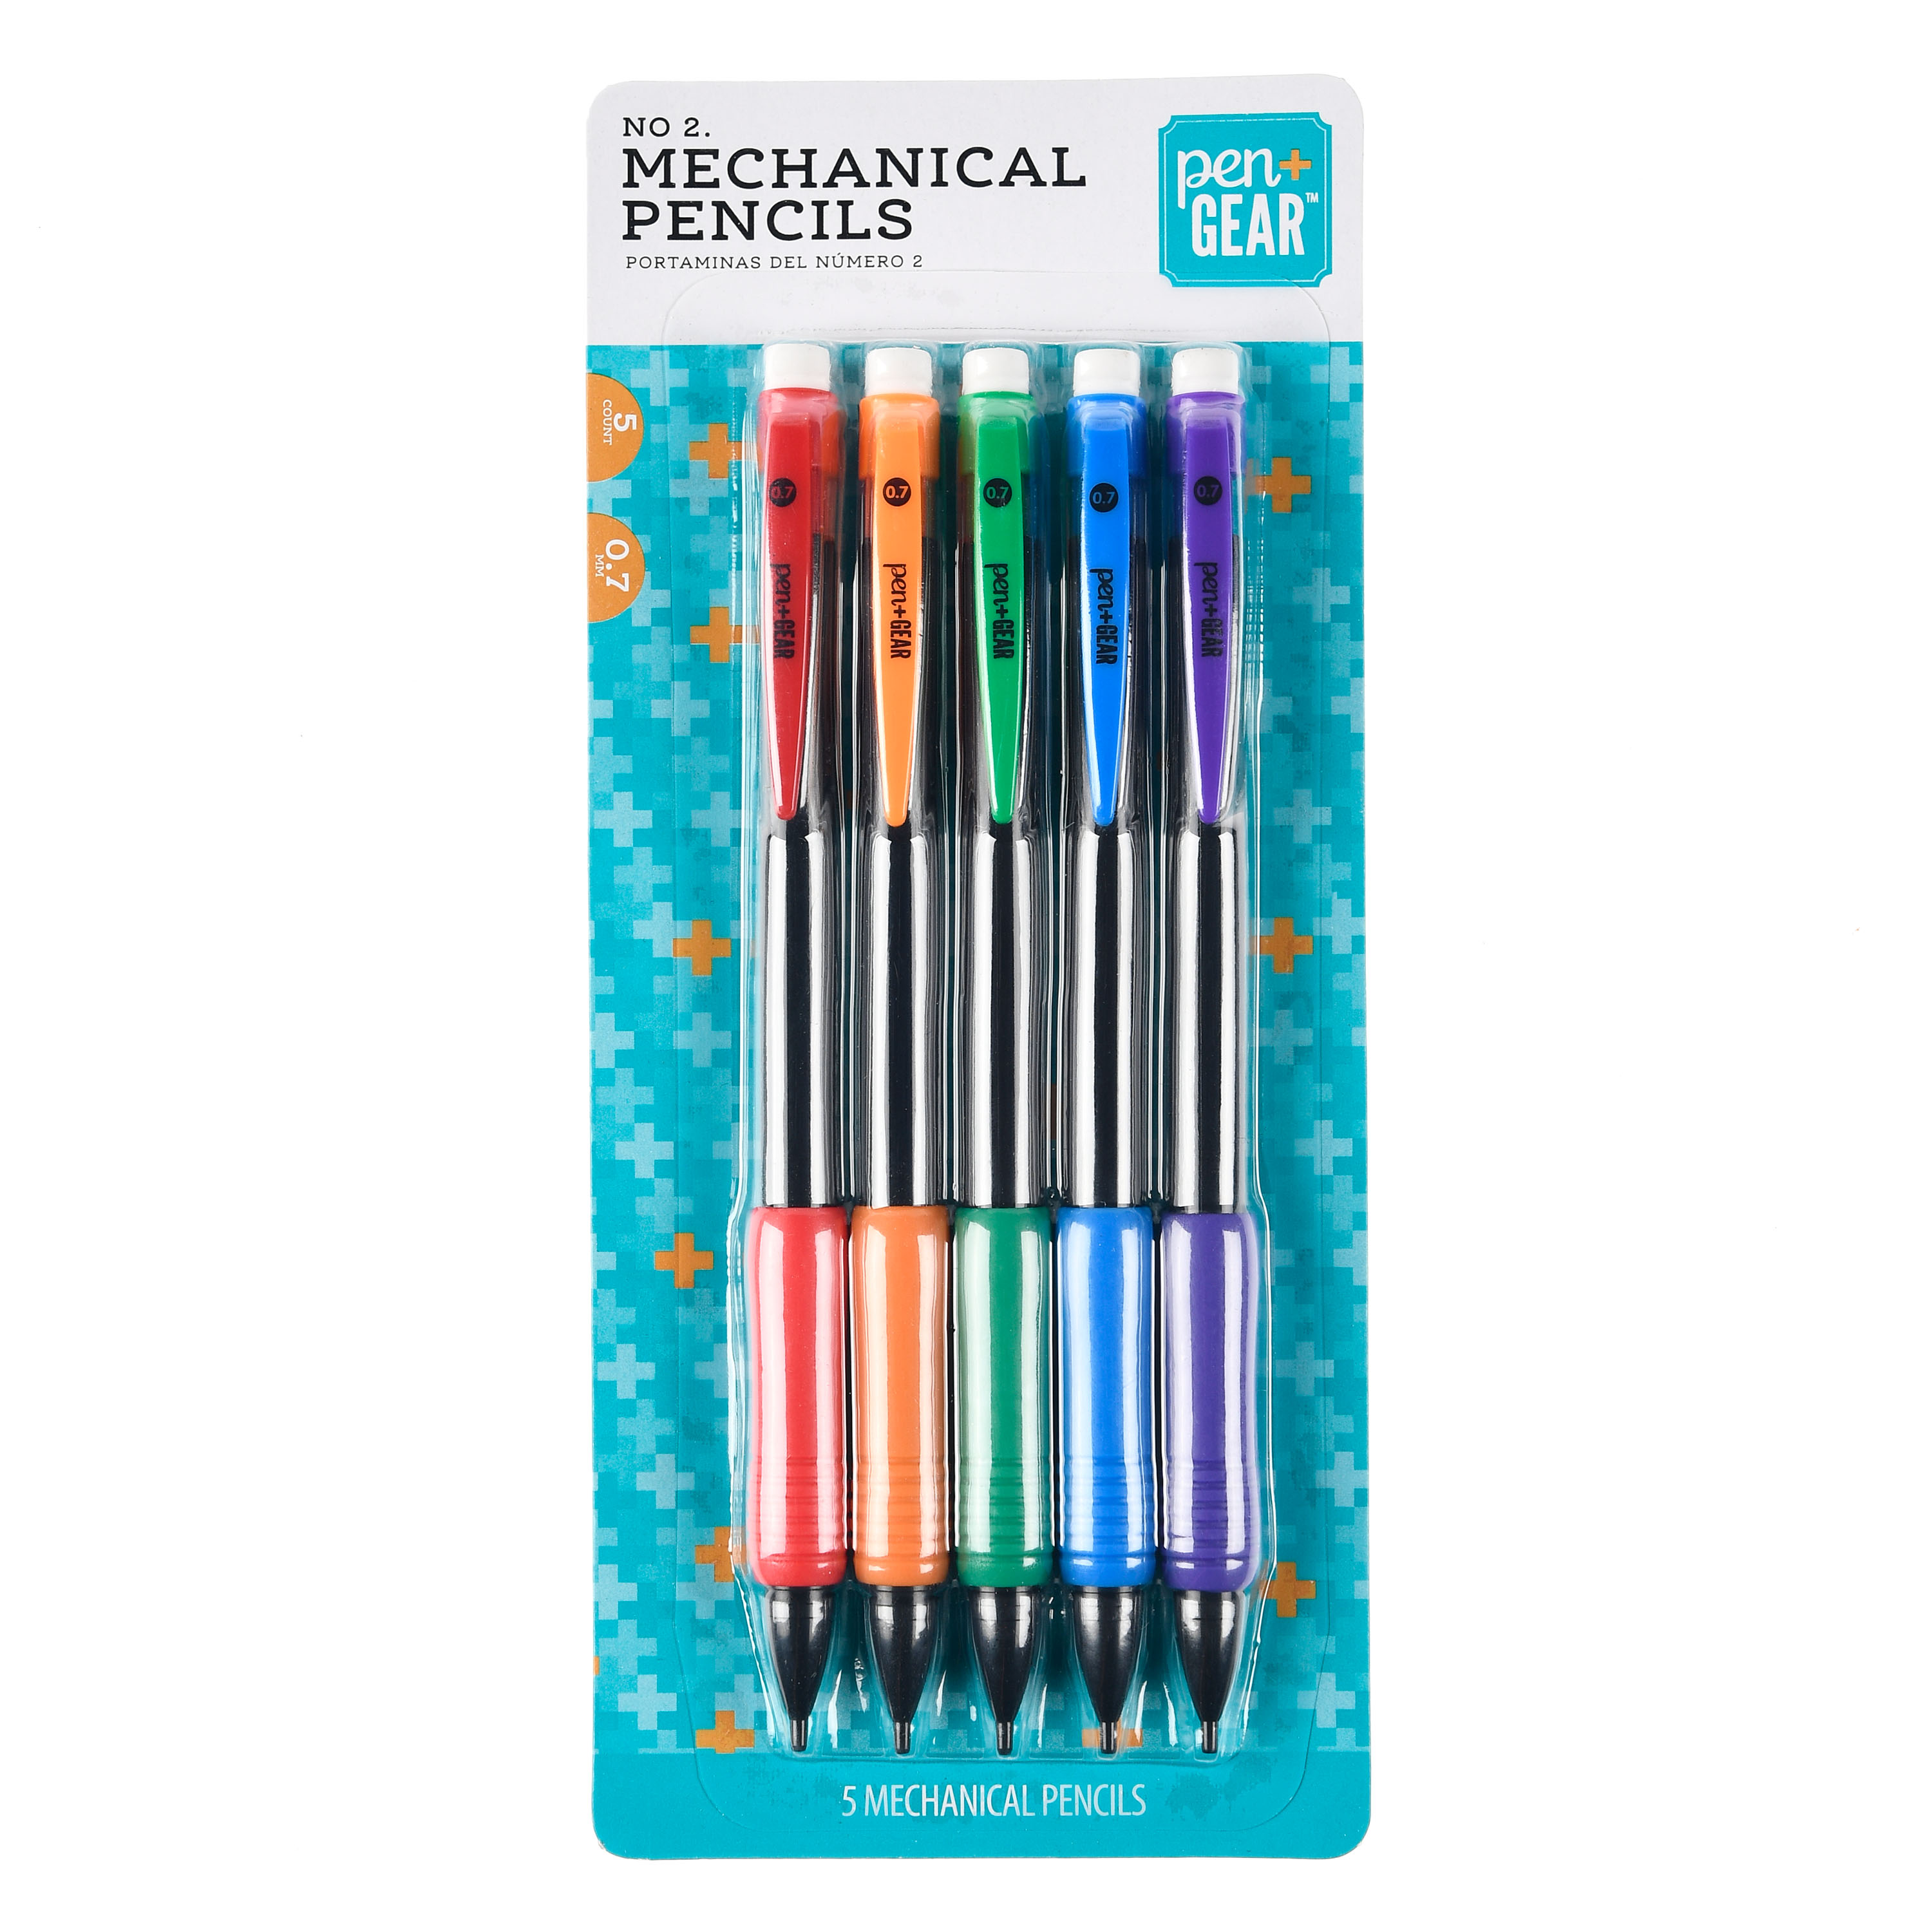 Pen+Gear No.2 Mechanical Pencils, 0.7mm, 5 Pack - image 2 of 8